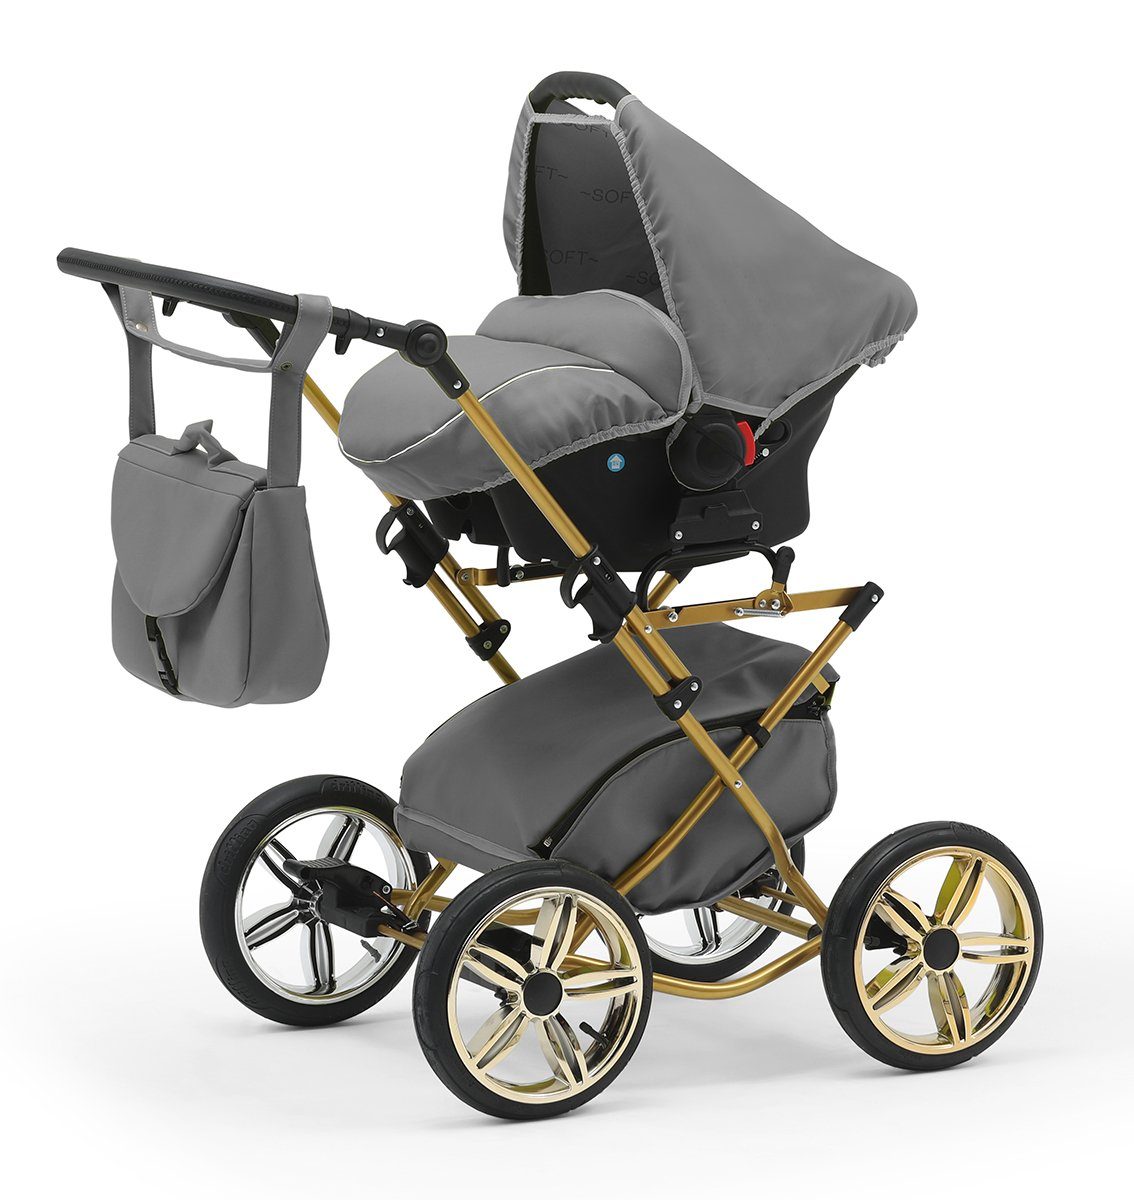 babies-on-wheels Kombi-Kinderwagen Designs und in Sorento - Autositz 1 10 Grau Iso 14 in Teile Base inkl. 4 